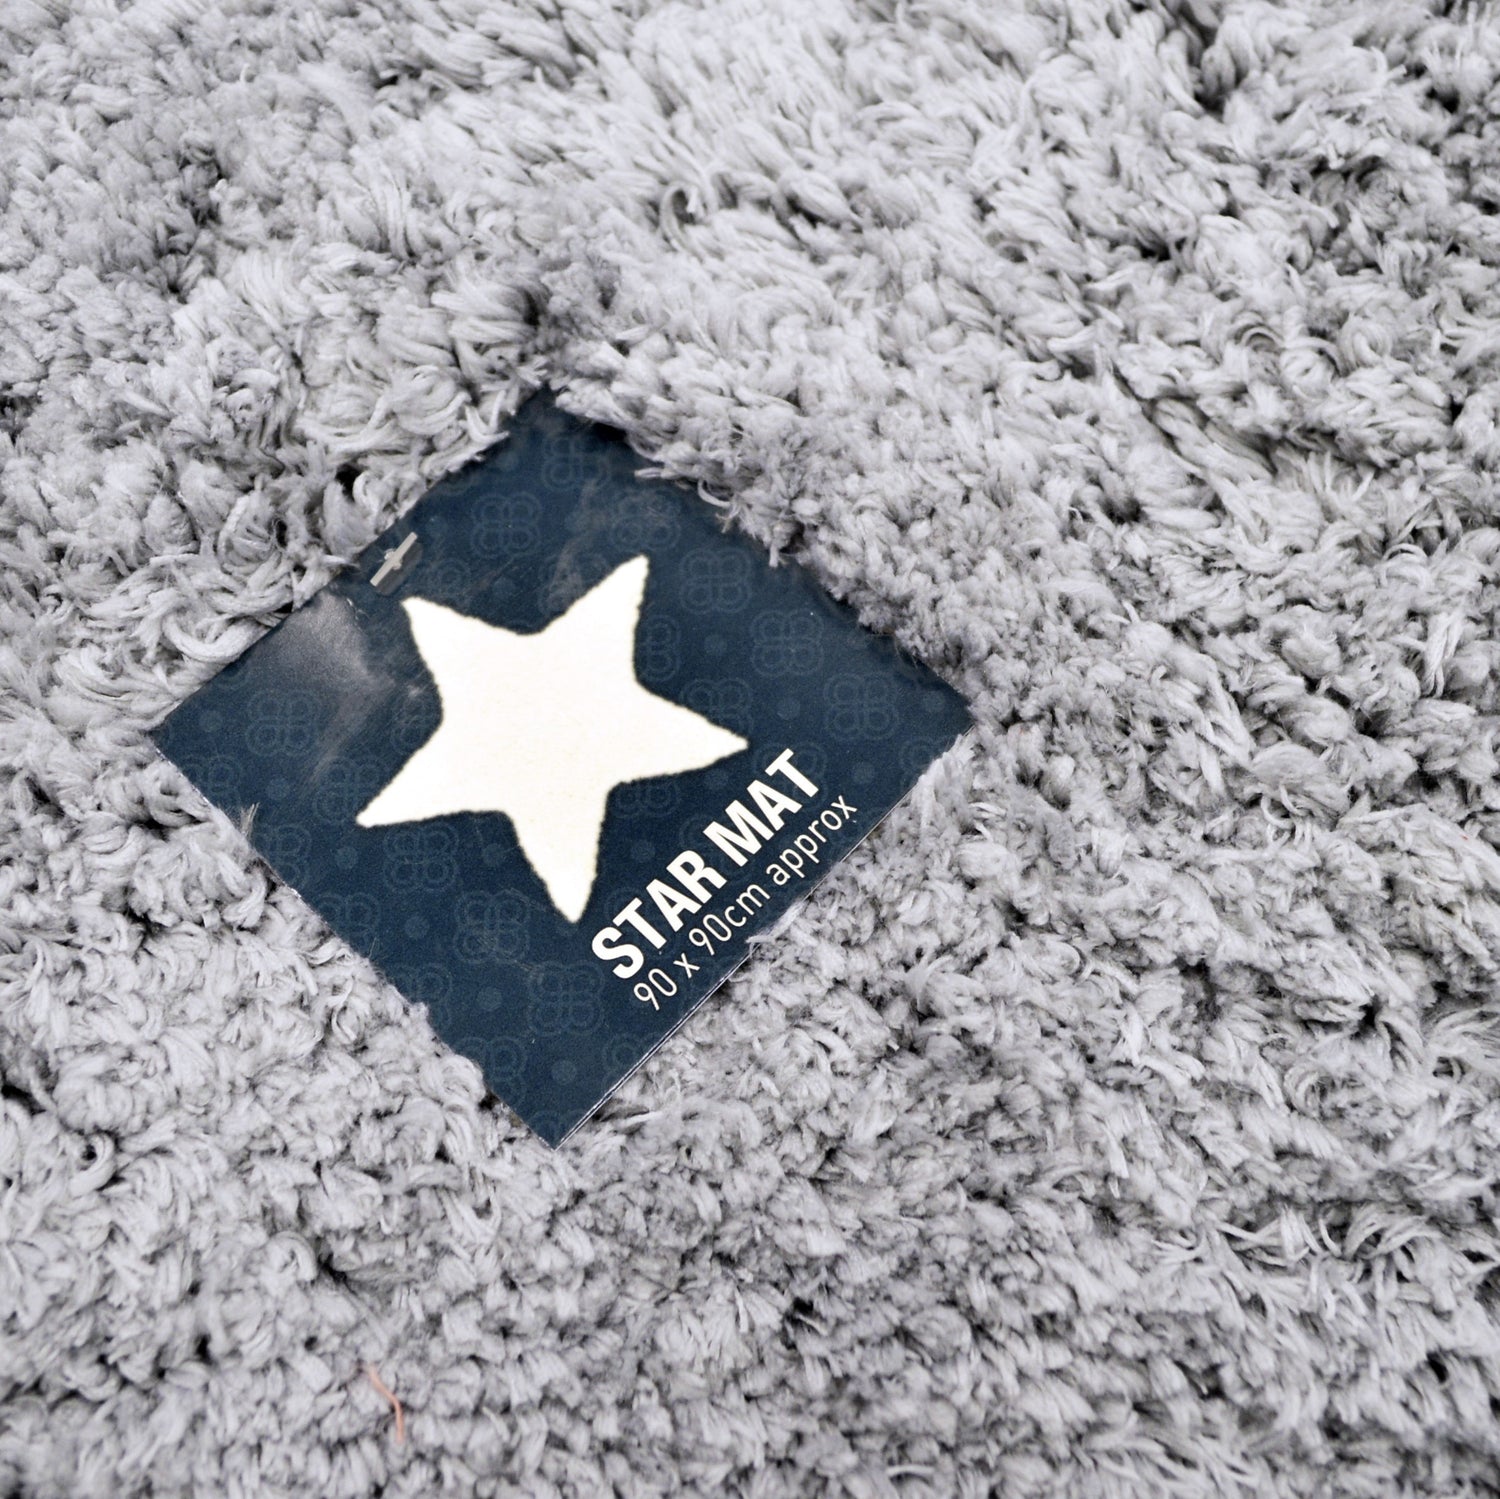 Super soft, shaggy rug in fun star shape - deep fluffy pile